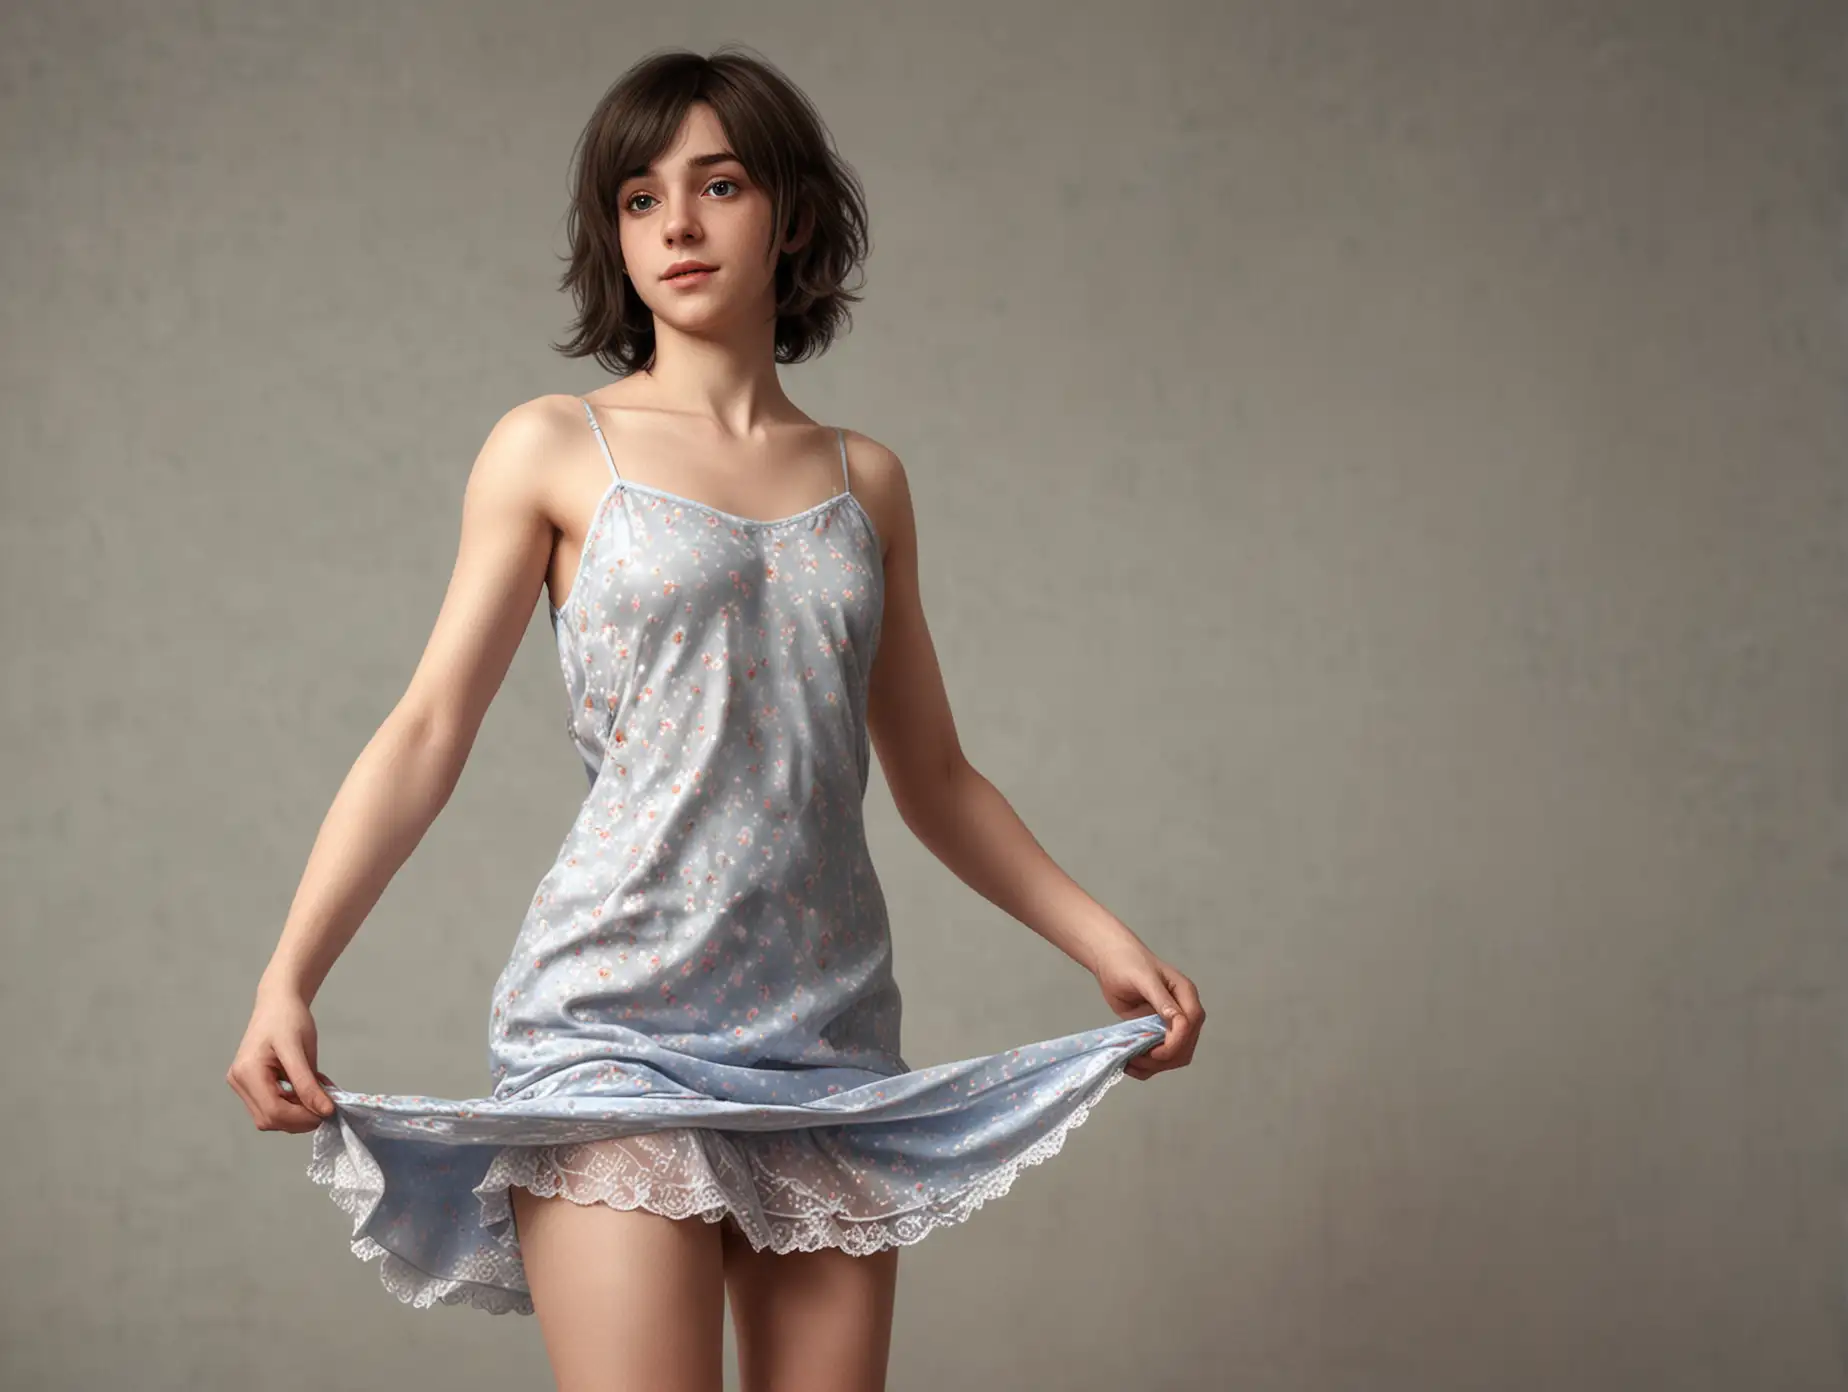 Realistic-Femboy-in-a-Dress-Revealing-Panties